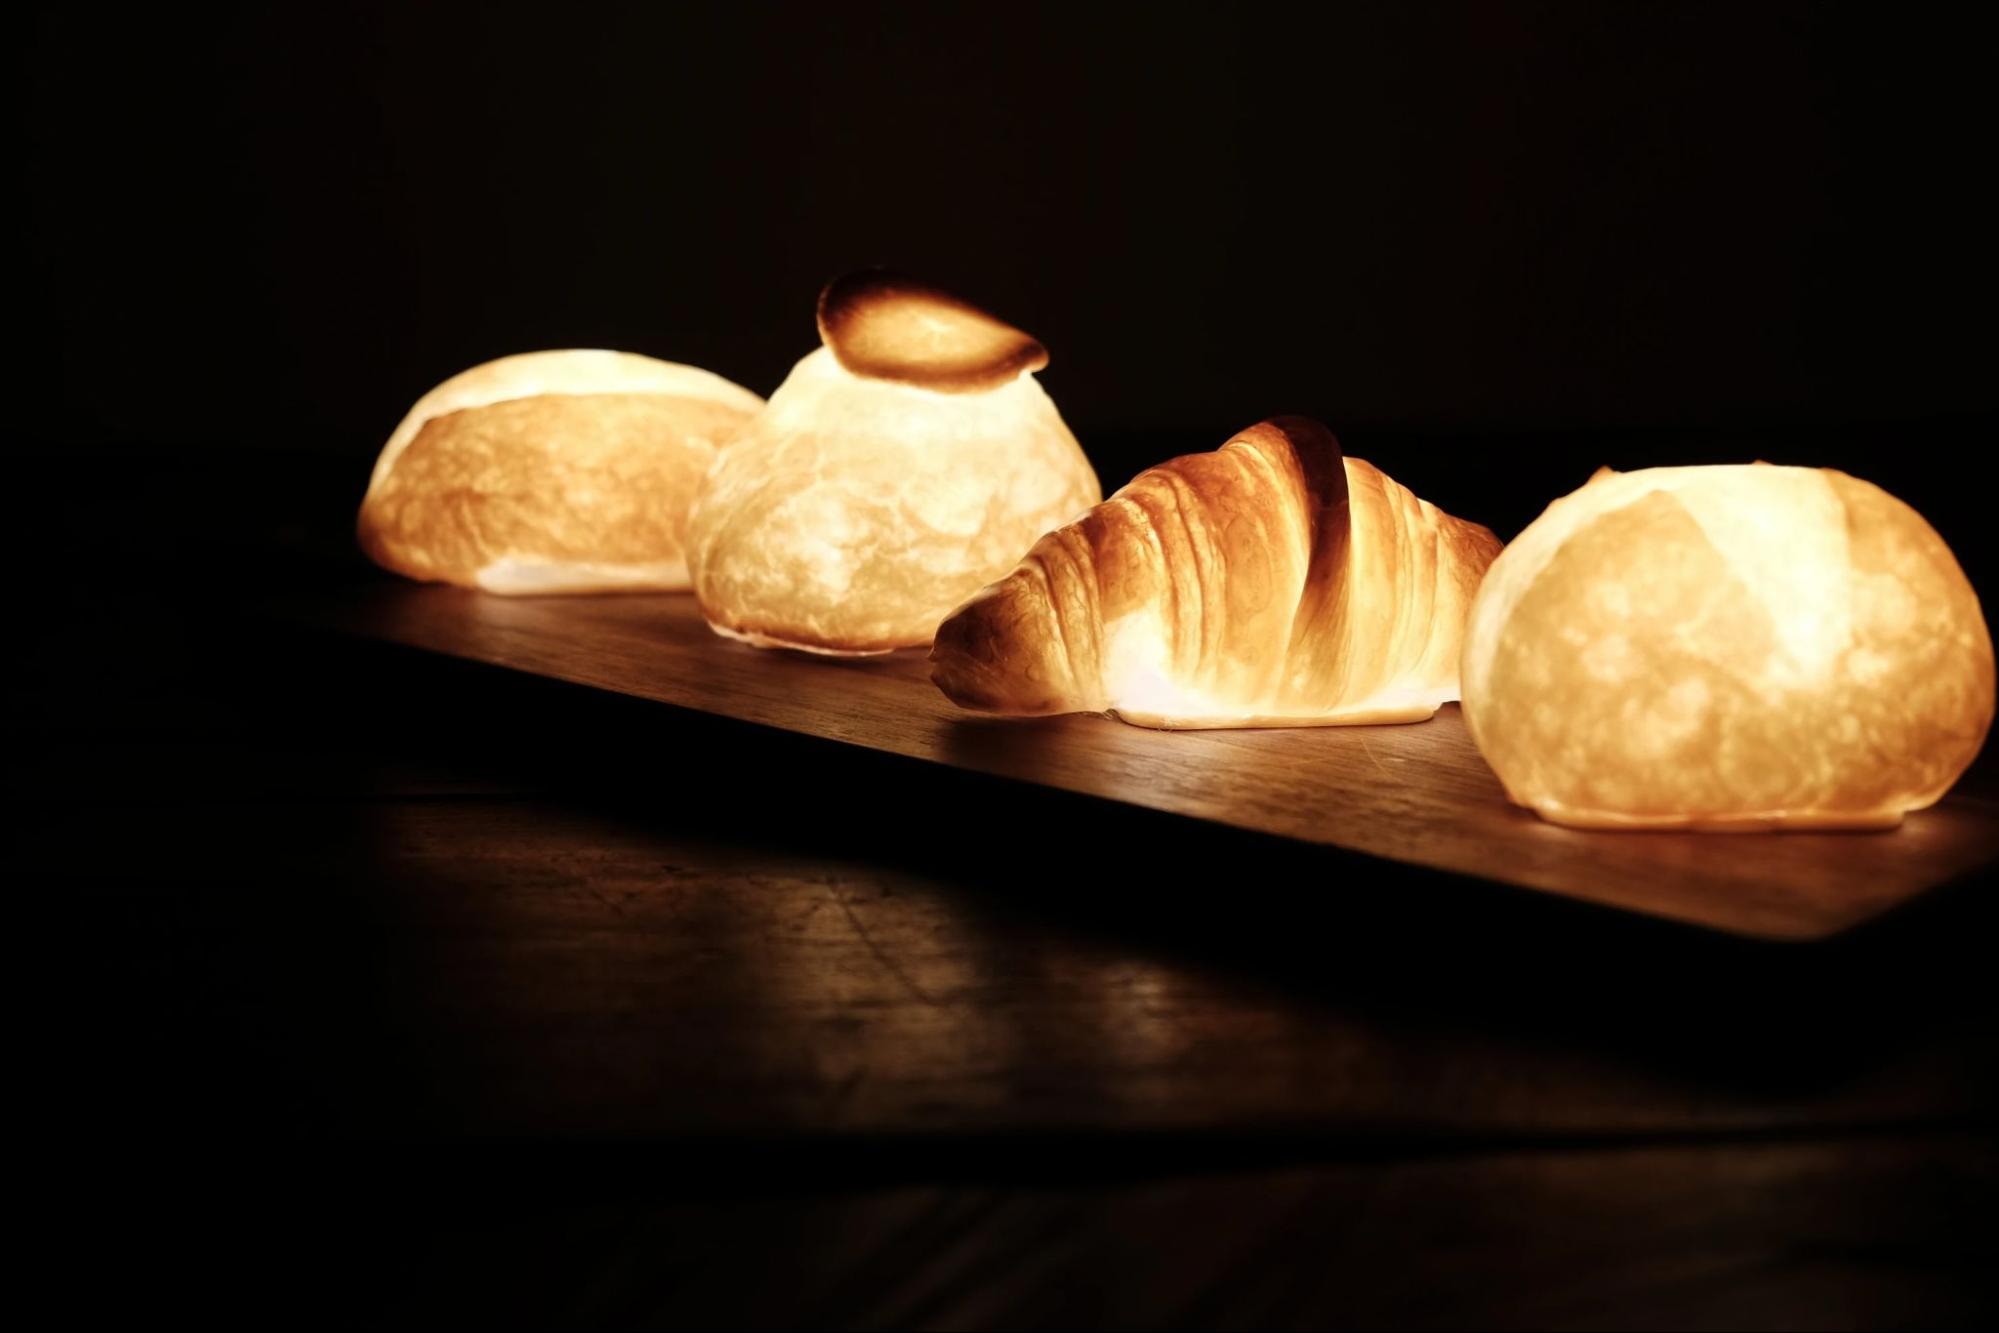 Lit bread lamps in the dark